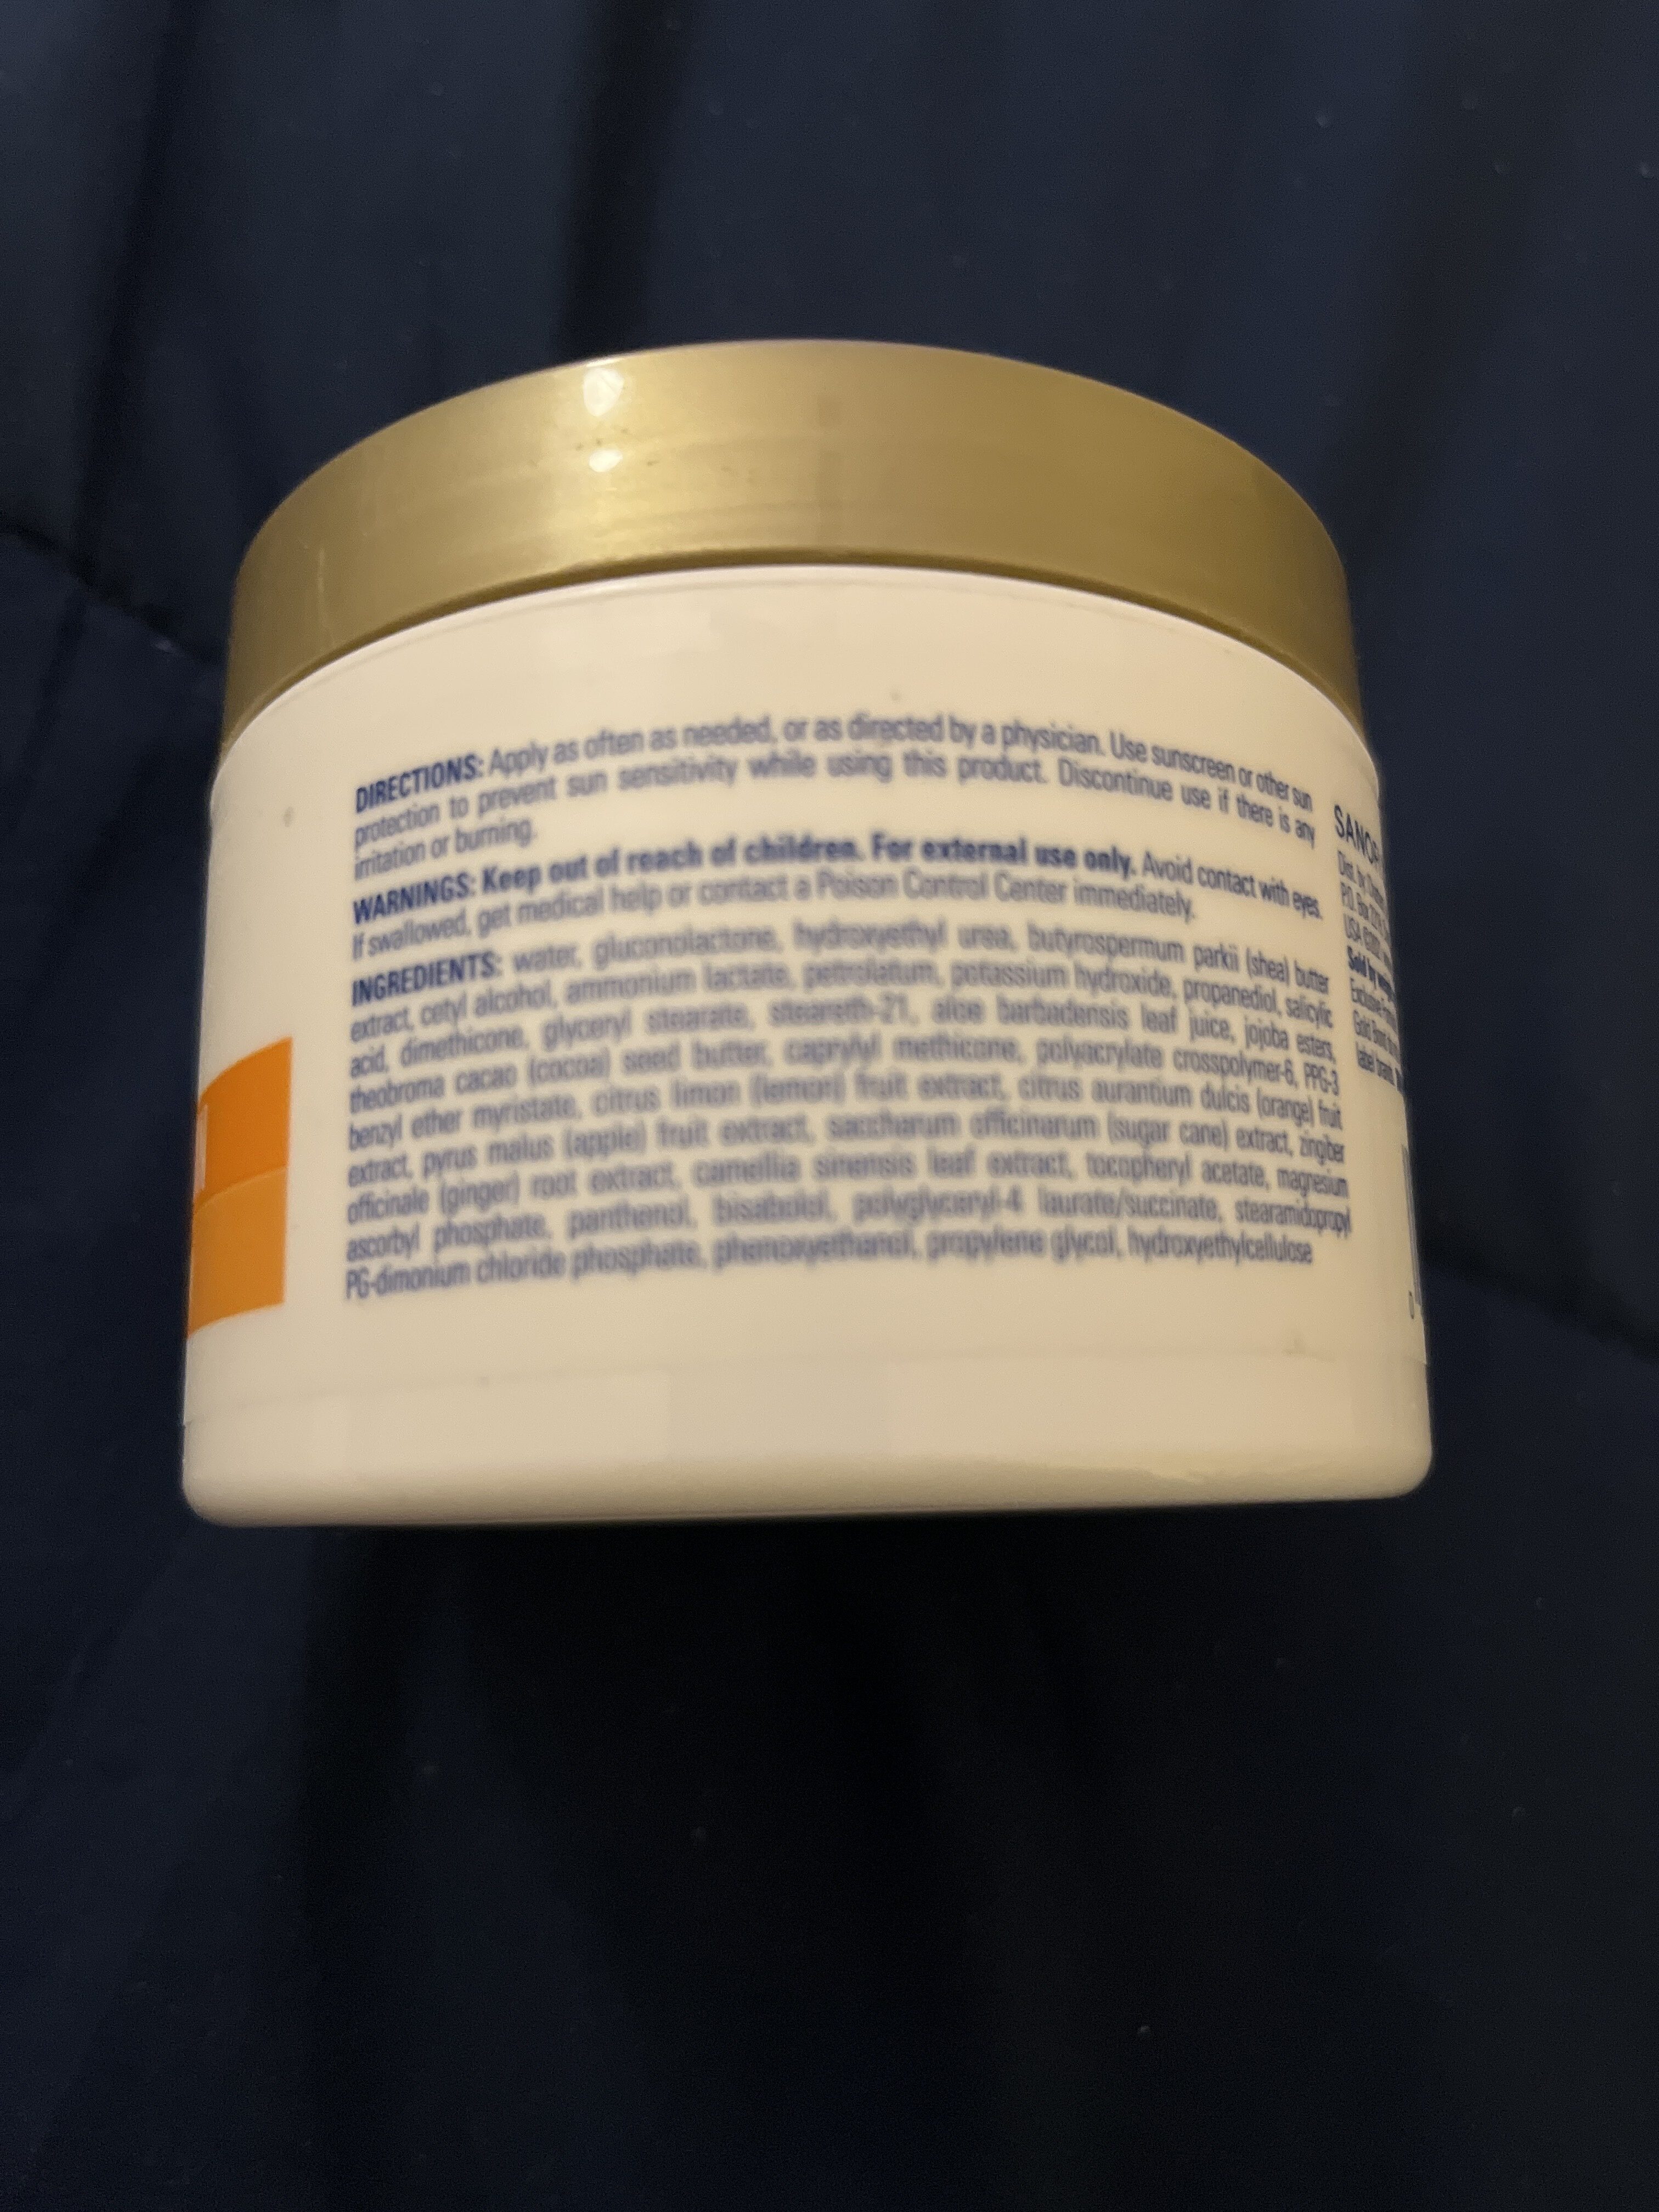 Rough & Bumpy Daiky Skin Therapy Cream - Ingrédients - en